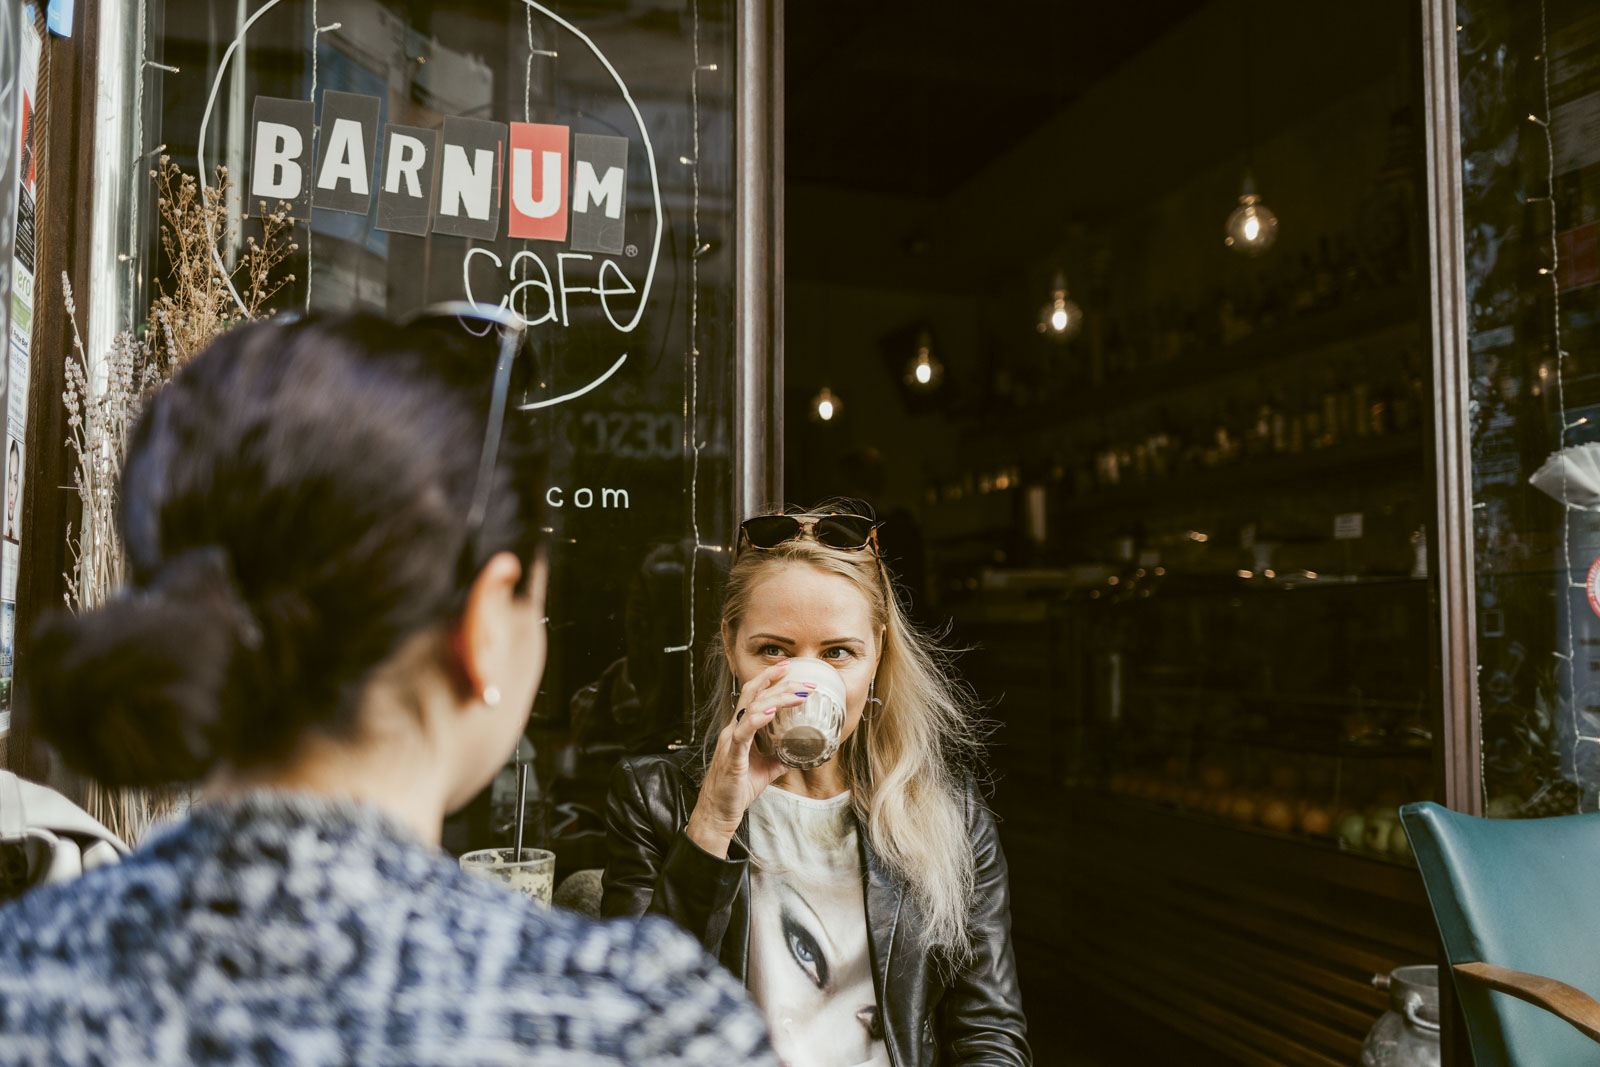 Barnum Cafe, Rome